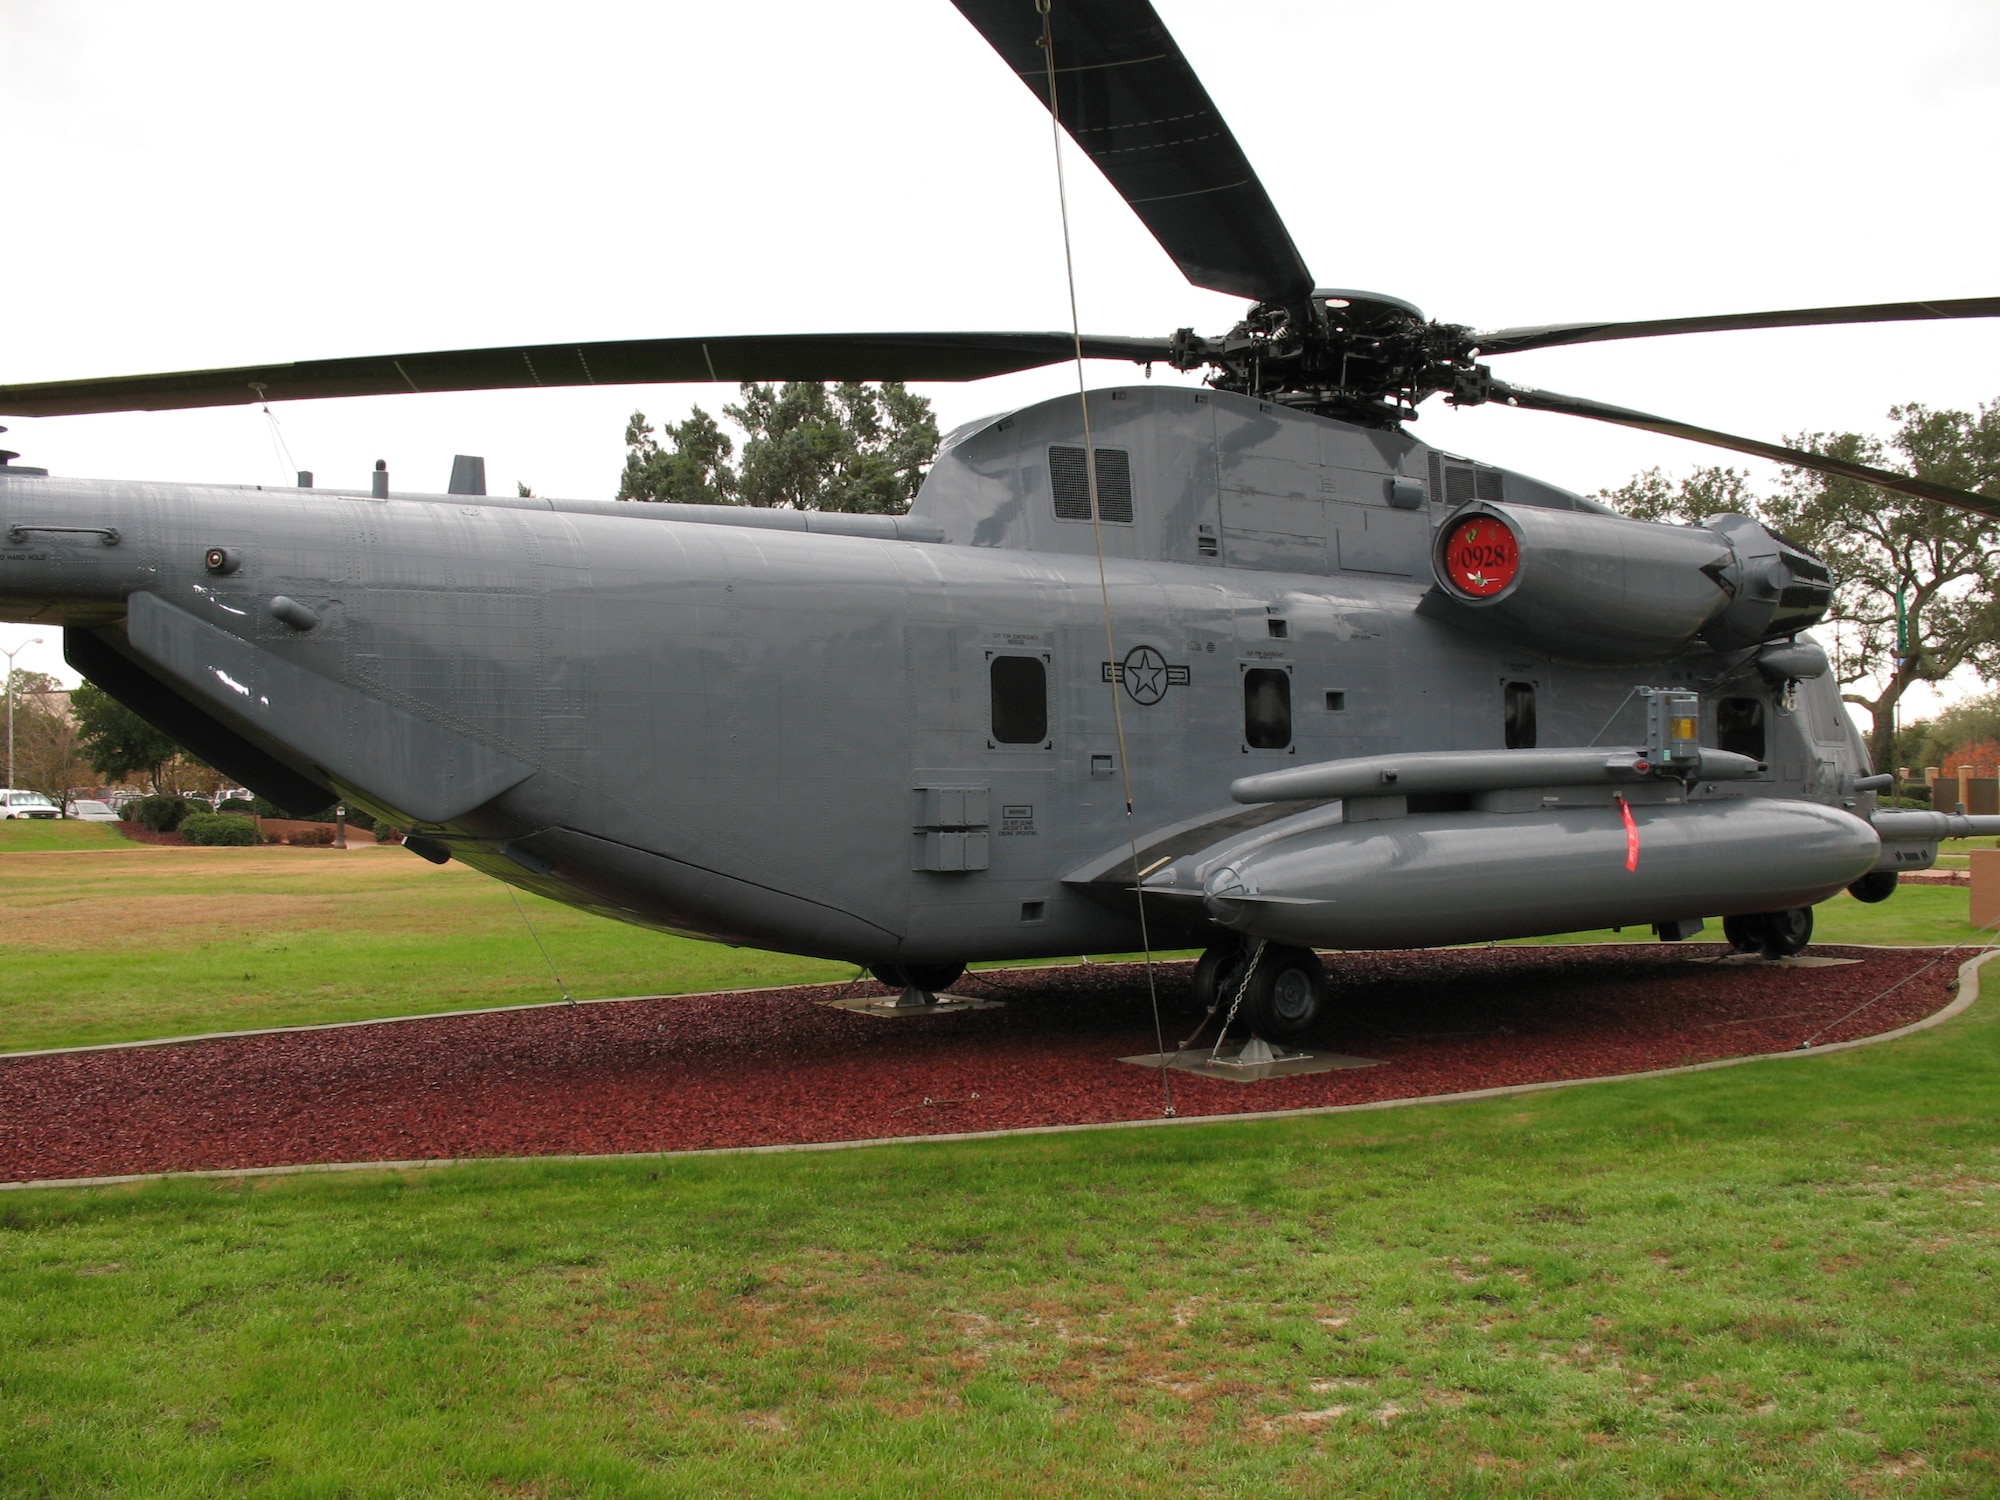 MH-53M 68-10928 Pave Low, Memorial Air Park, Hurlburt Field, FL